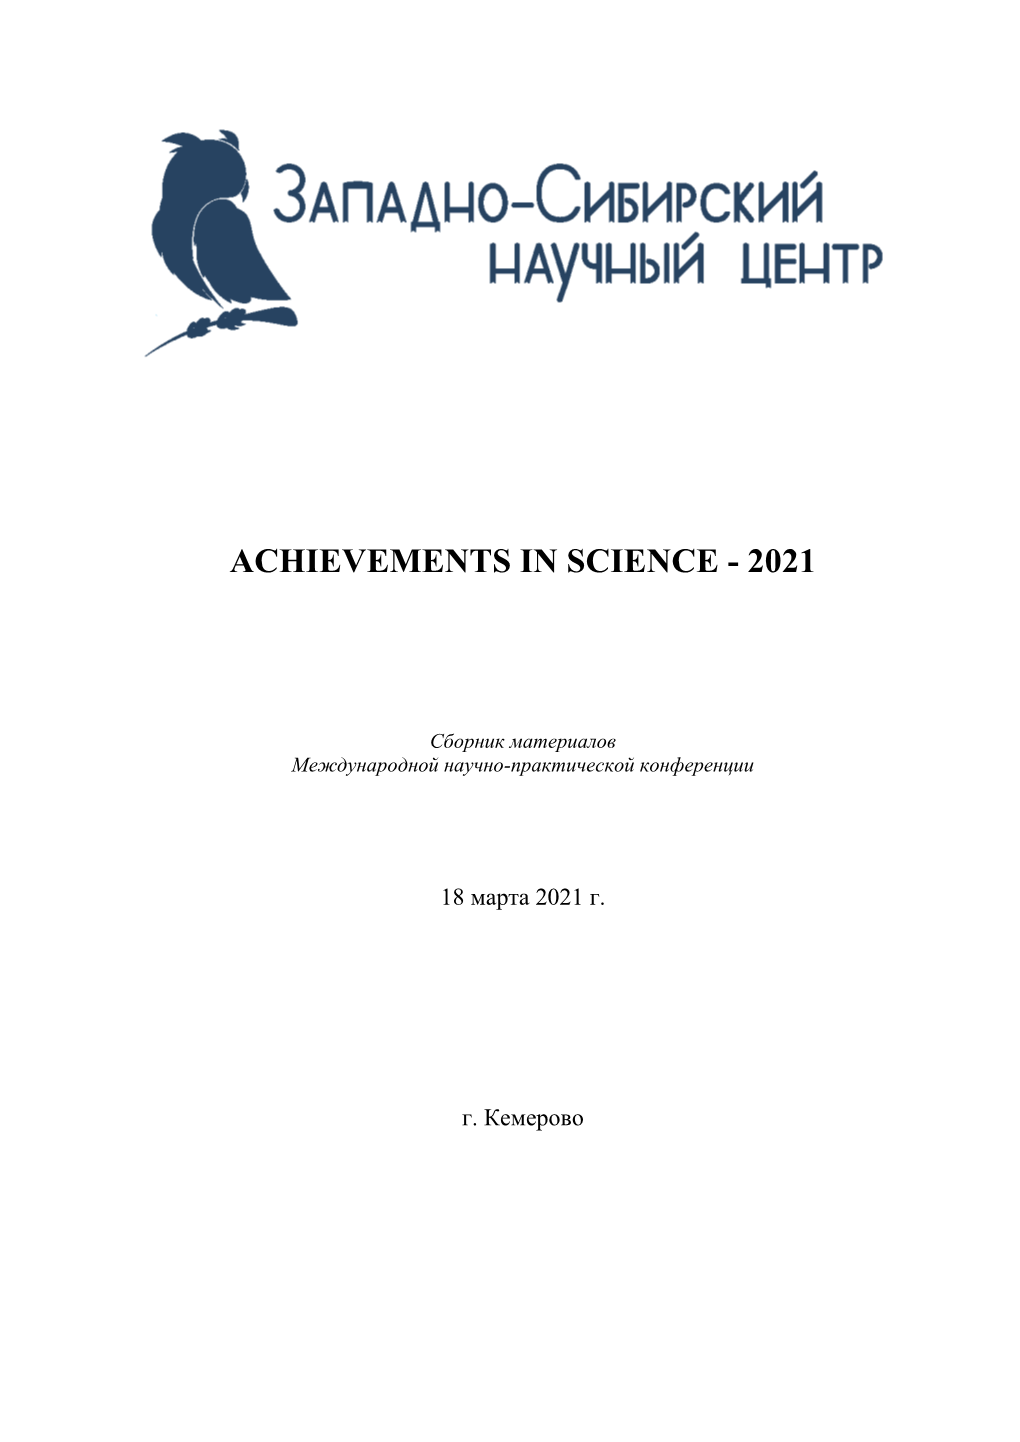 Achievements in Science - 2021